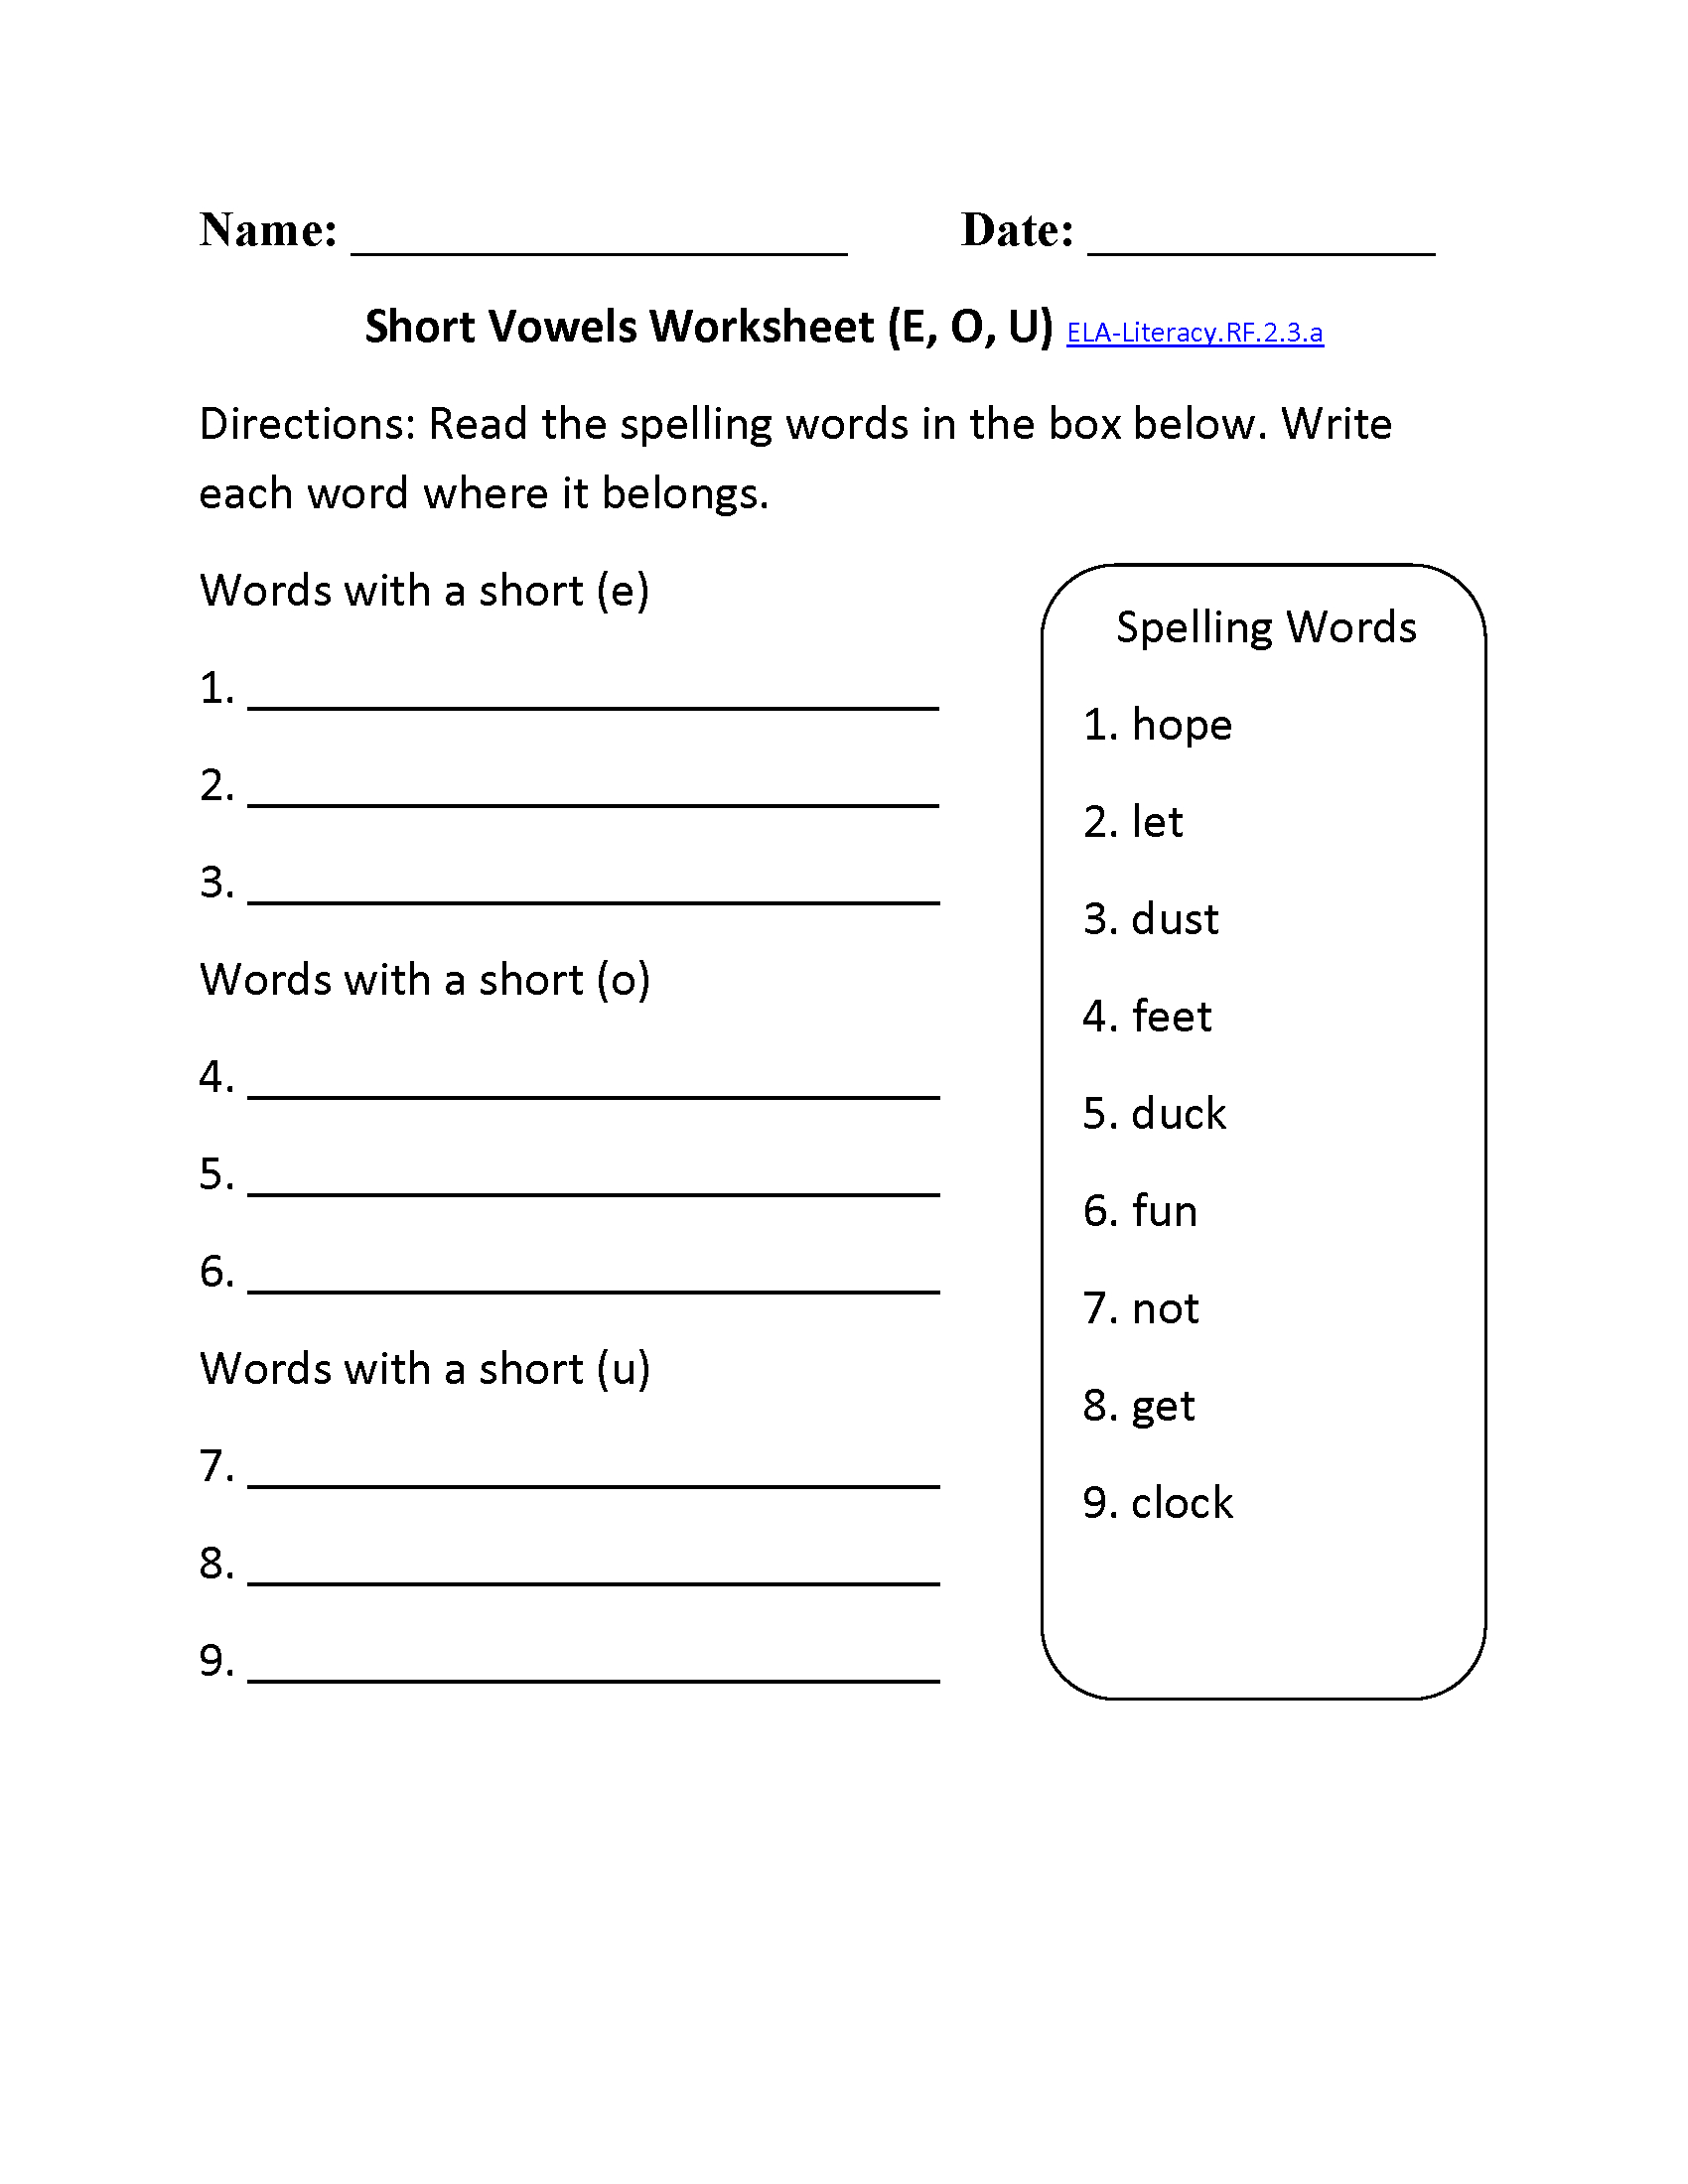 adjectives-worksheets-for-grade-2-pdf-in-2020-adjective-worksheet-2nd-grade-worksheets-nouns